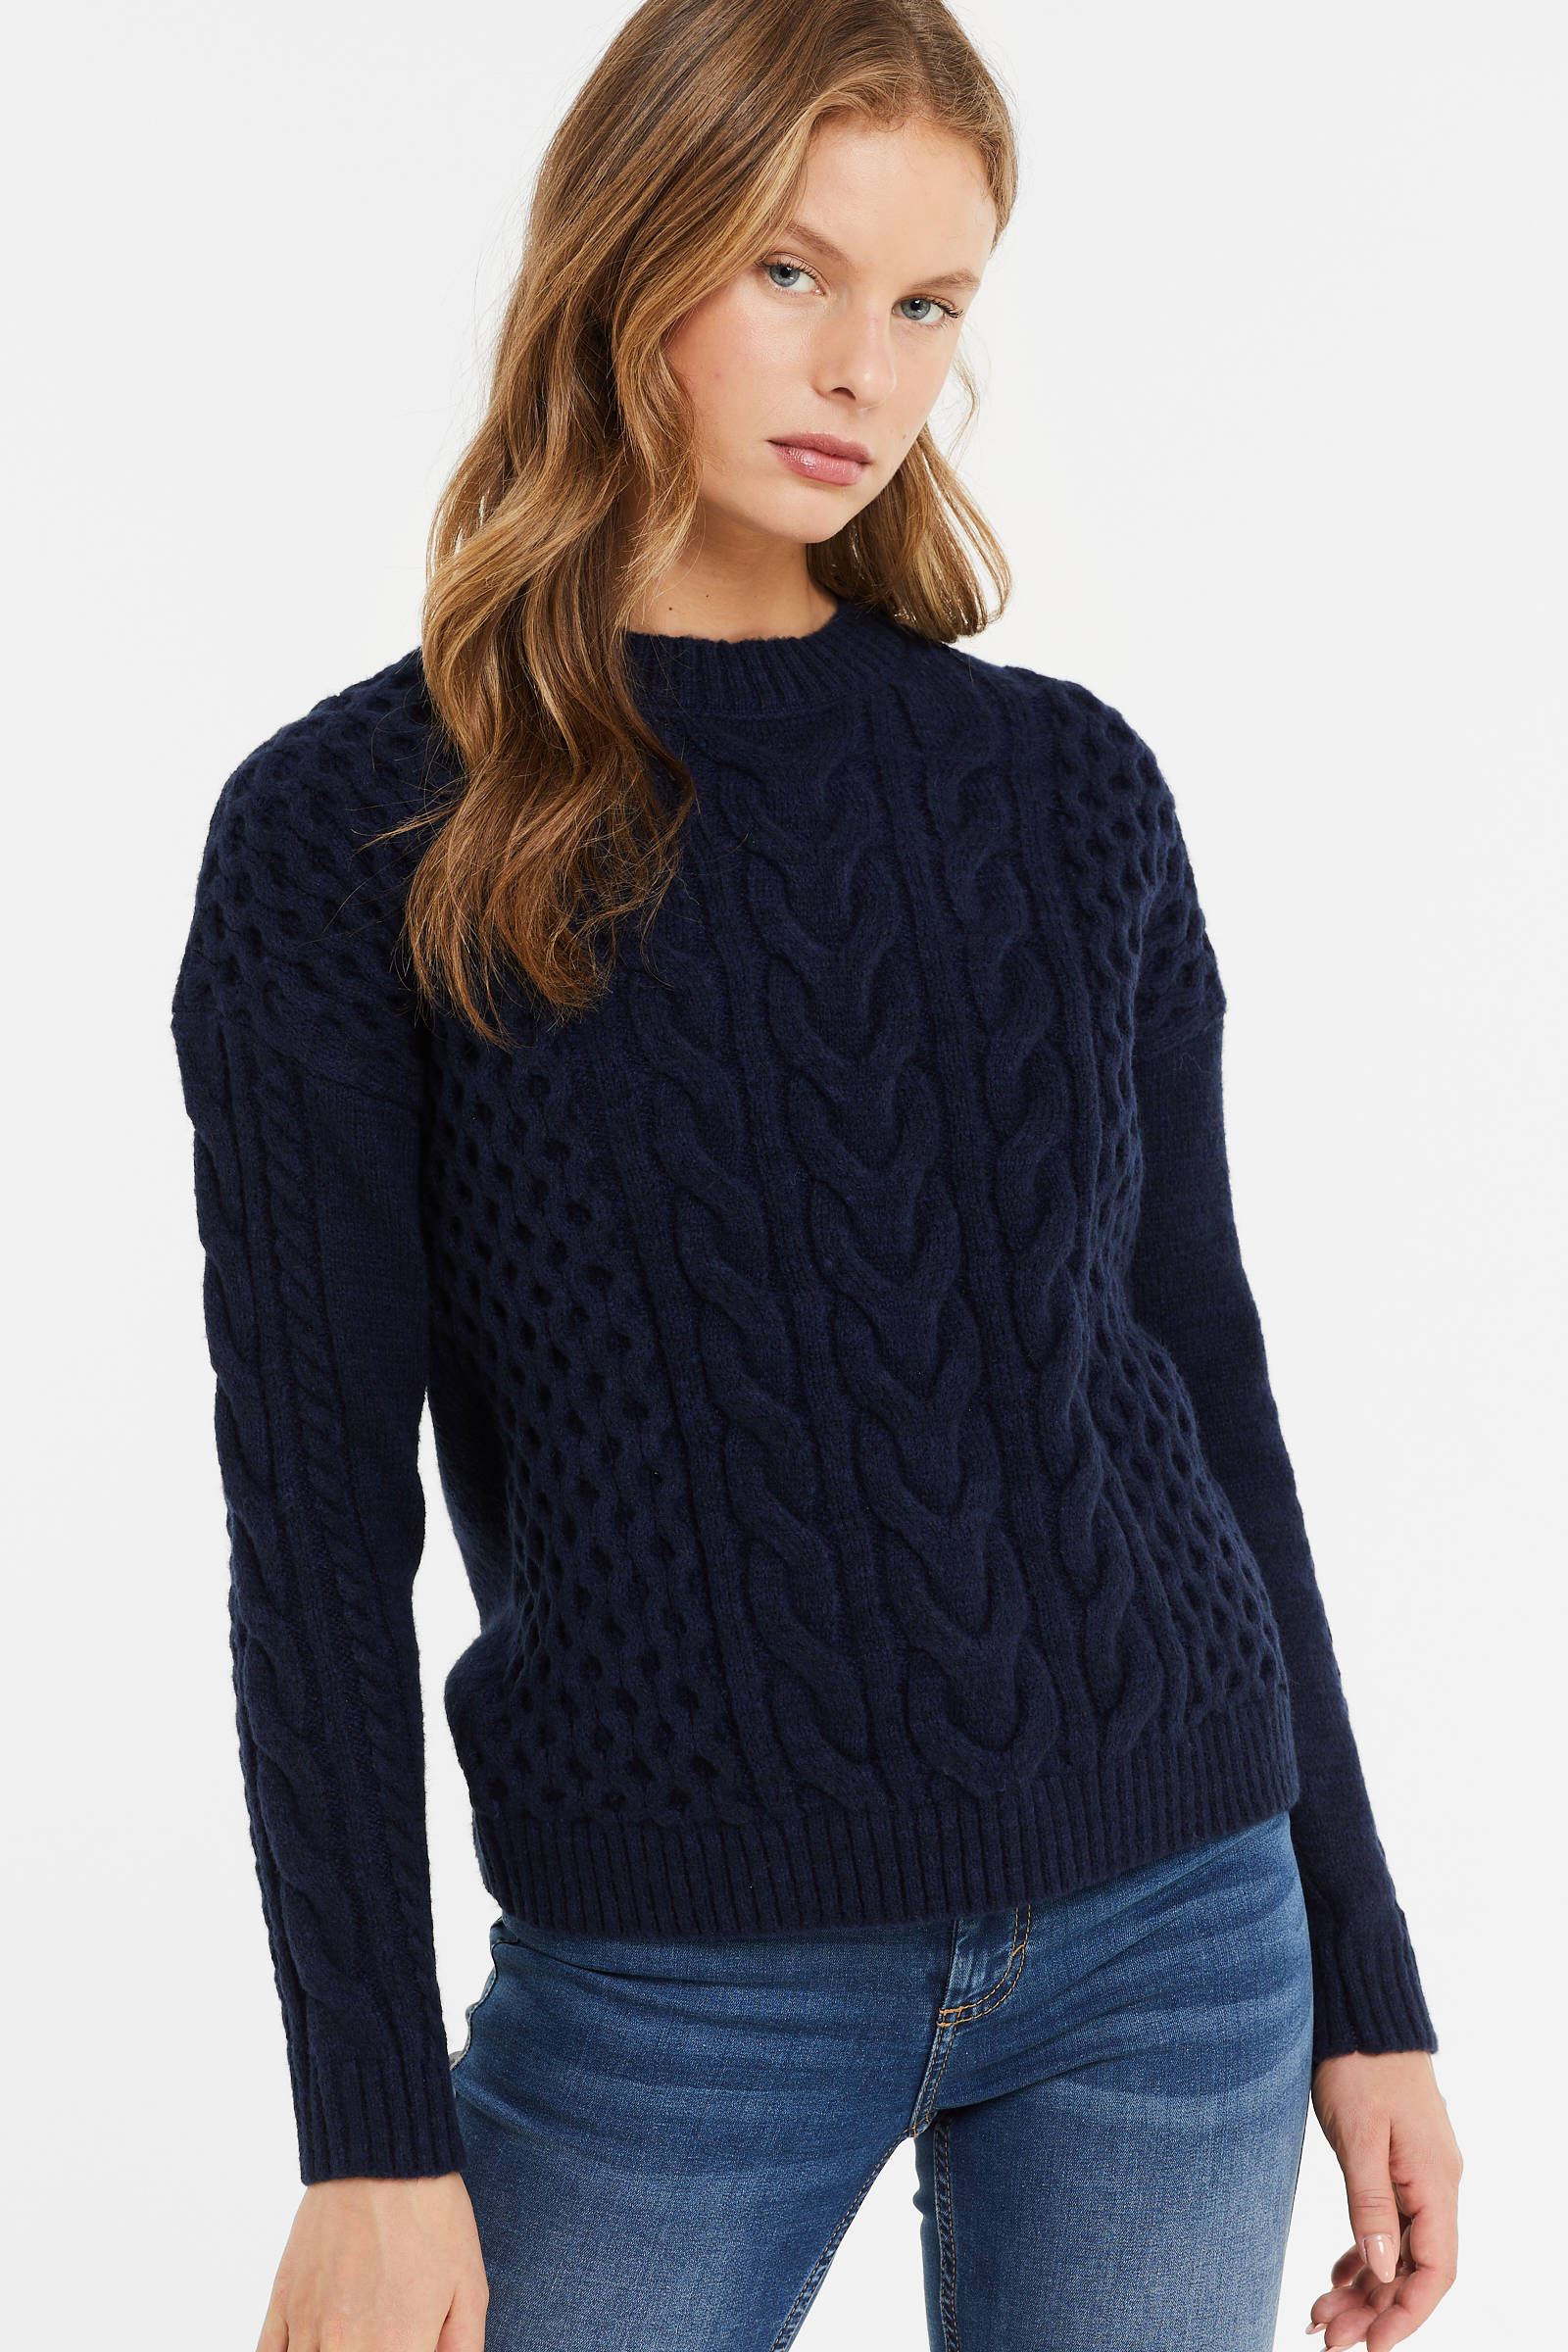 Kleding Dameskleding Sweaters Pullovers Blauwe hand gebreide pullover Chunky gebreide dames trui met exstra lange mouwen Maat M-L Klaar om te verzenden 